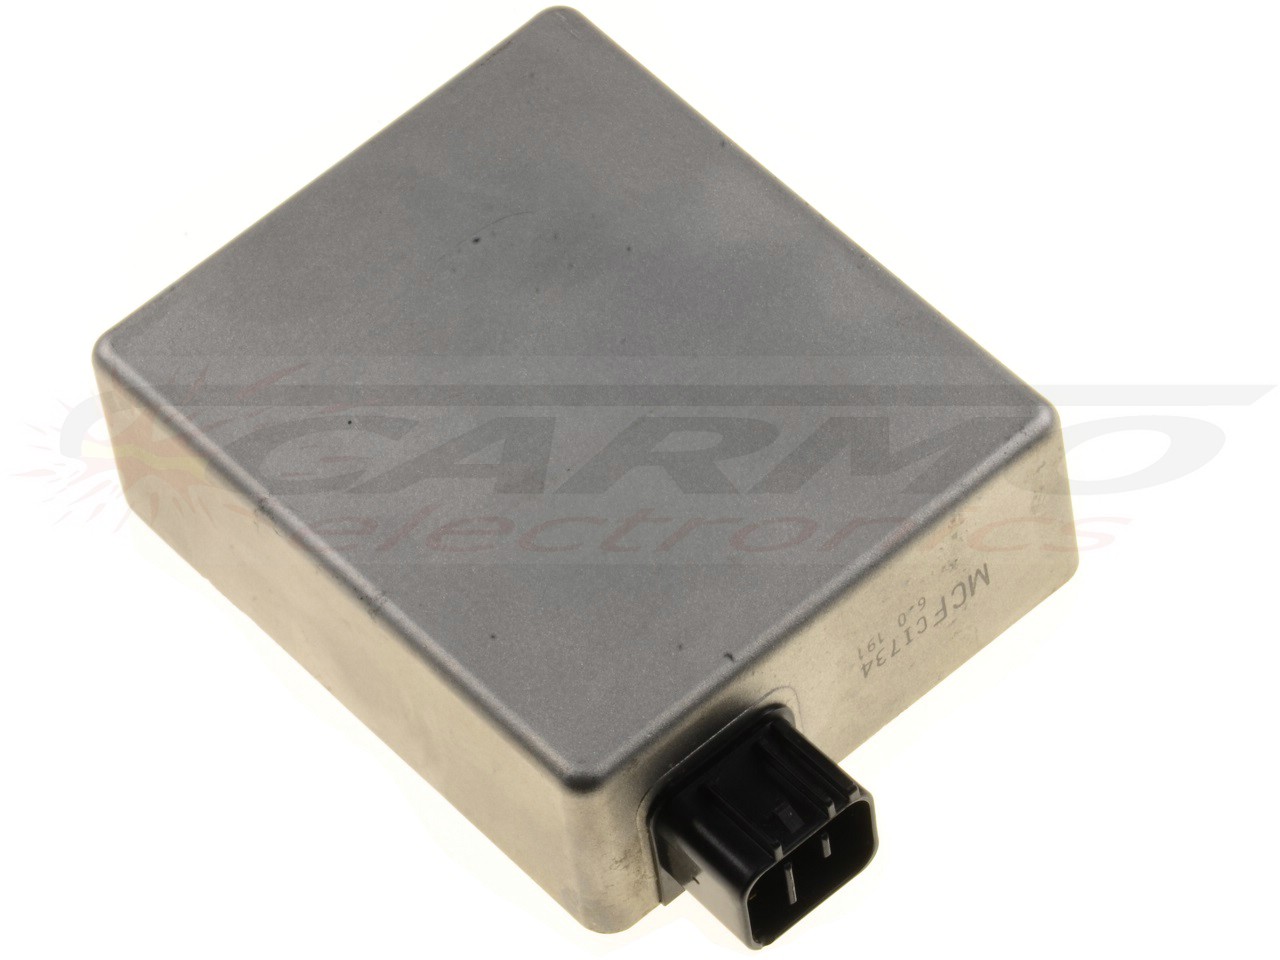 VTR1000 VTR1000F SP1 SP2 Boost-unit converter igniter ignition module TCI CDI Box (MCF, CI734)